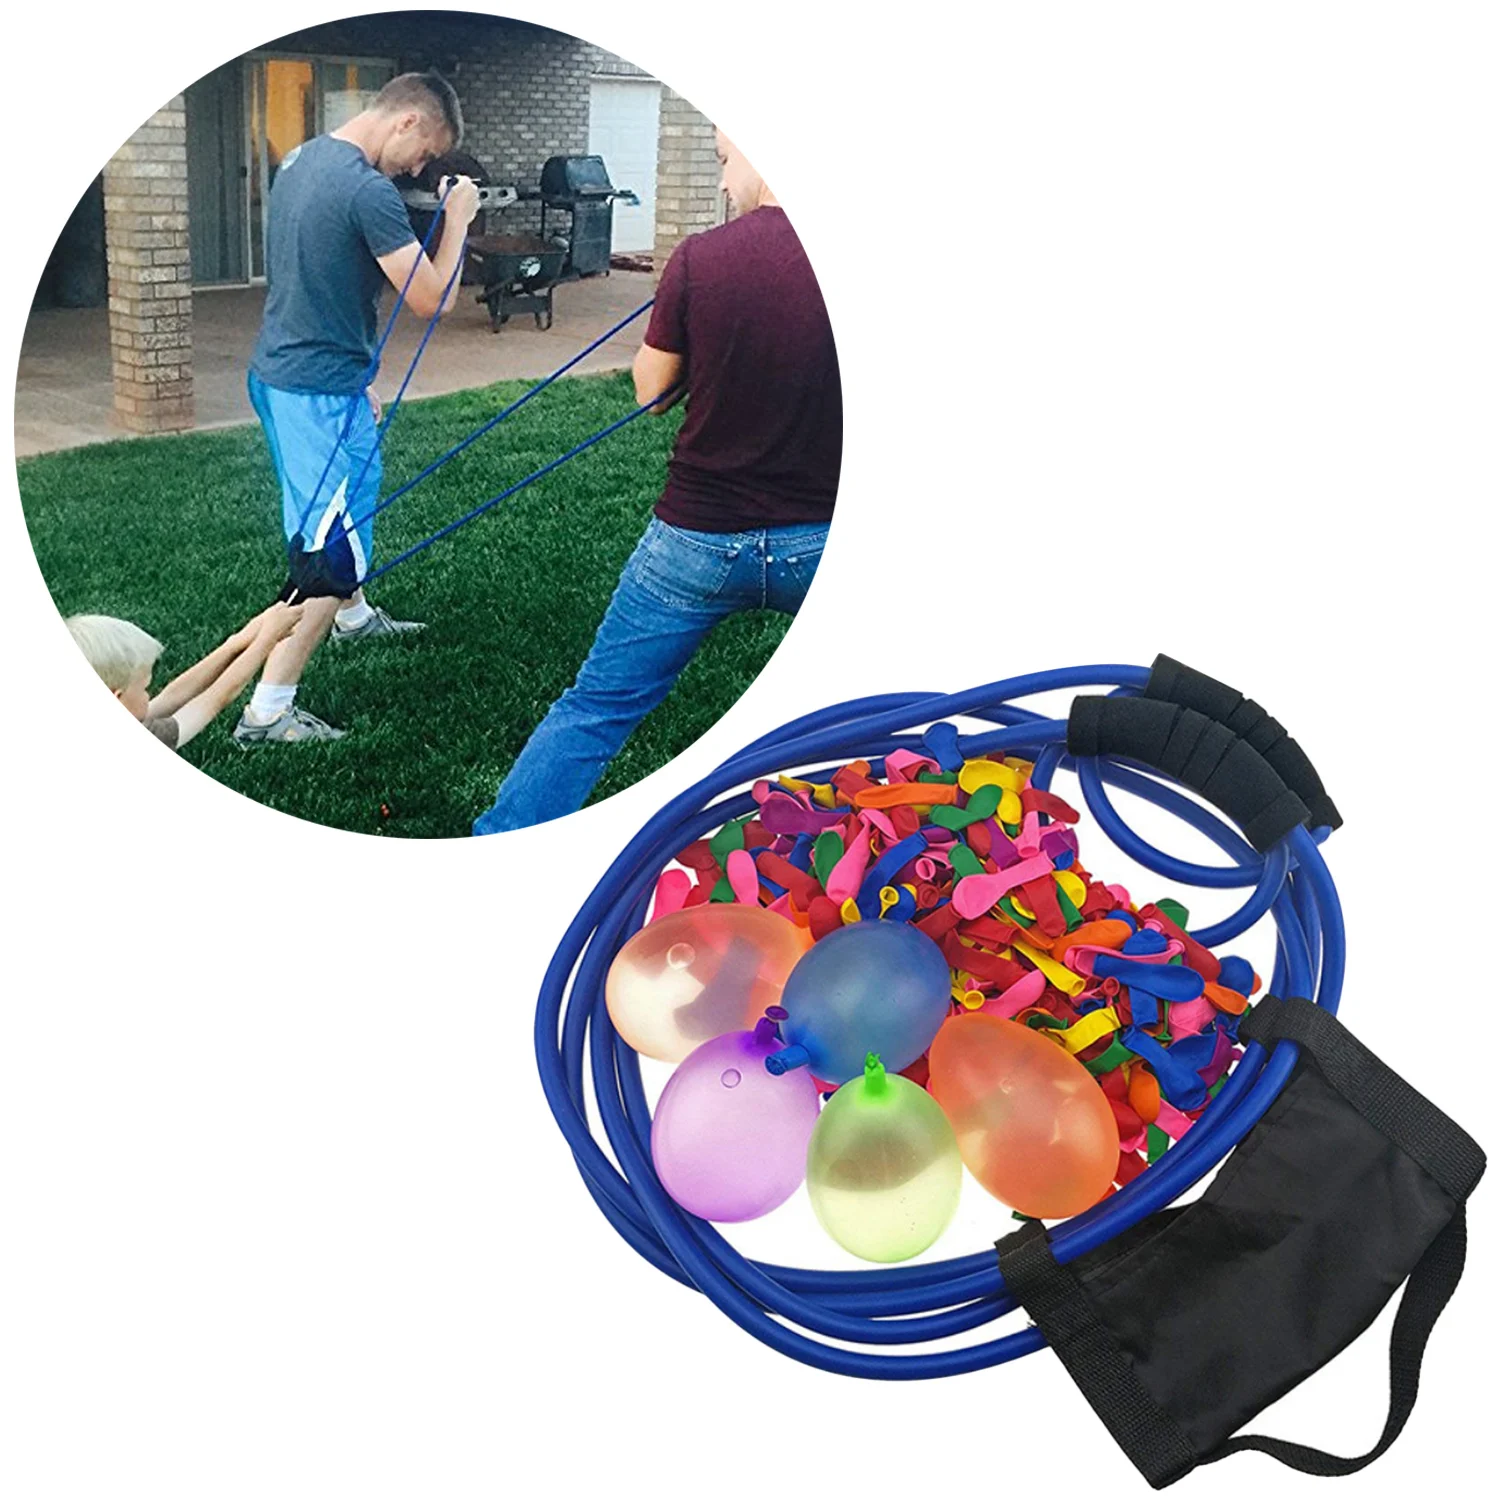 Water Bomb Slingshot Ballon Shoot Thorw Game Party Fun Outdoor Sling Shot Fun 